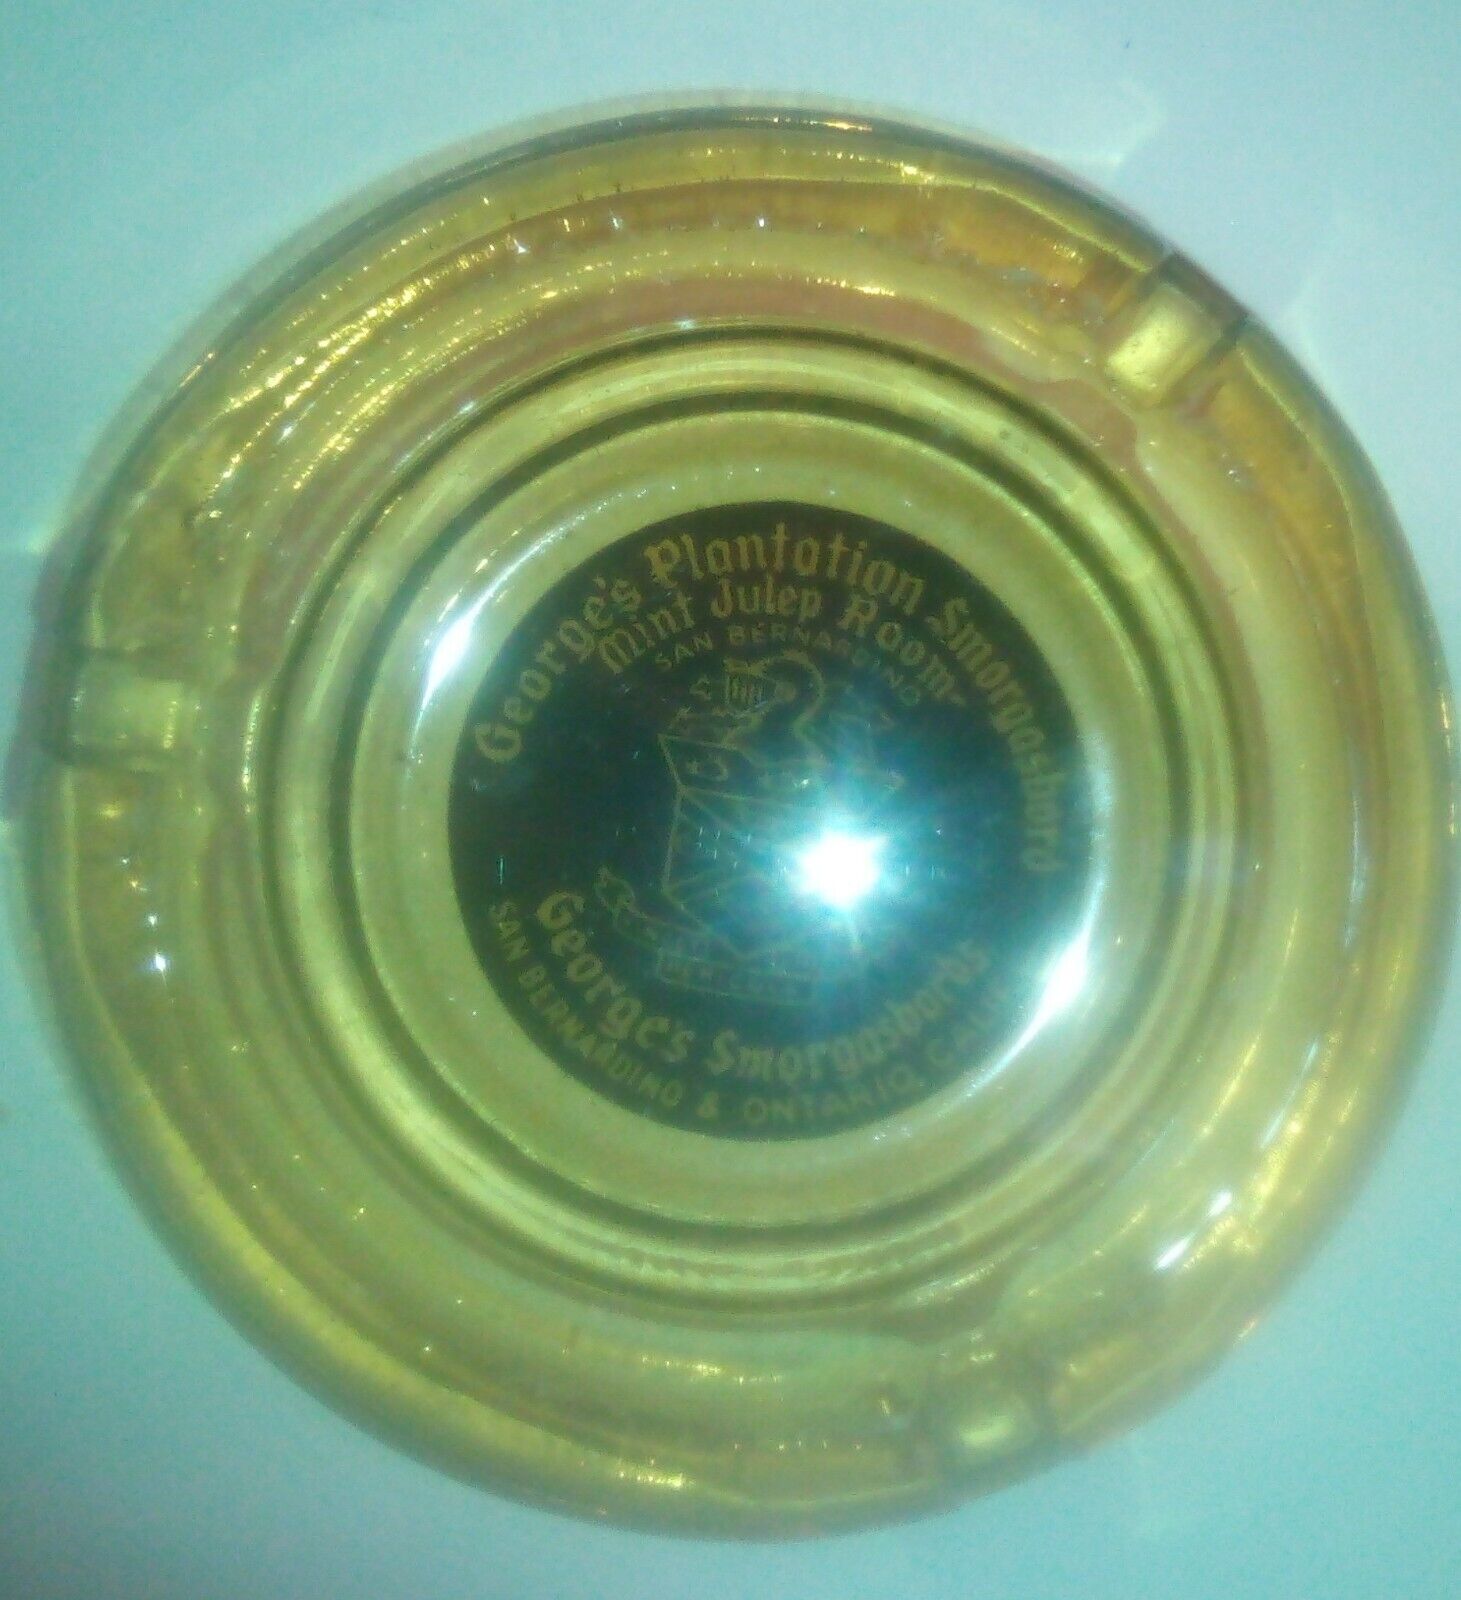 VTG George’s Plantation Smorgasbord Mint Julep Room San Bernardino Glass Ashtray